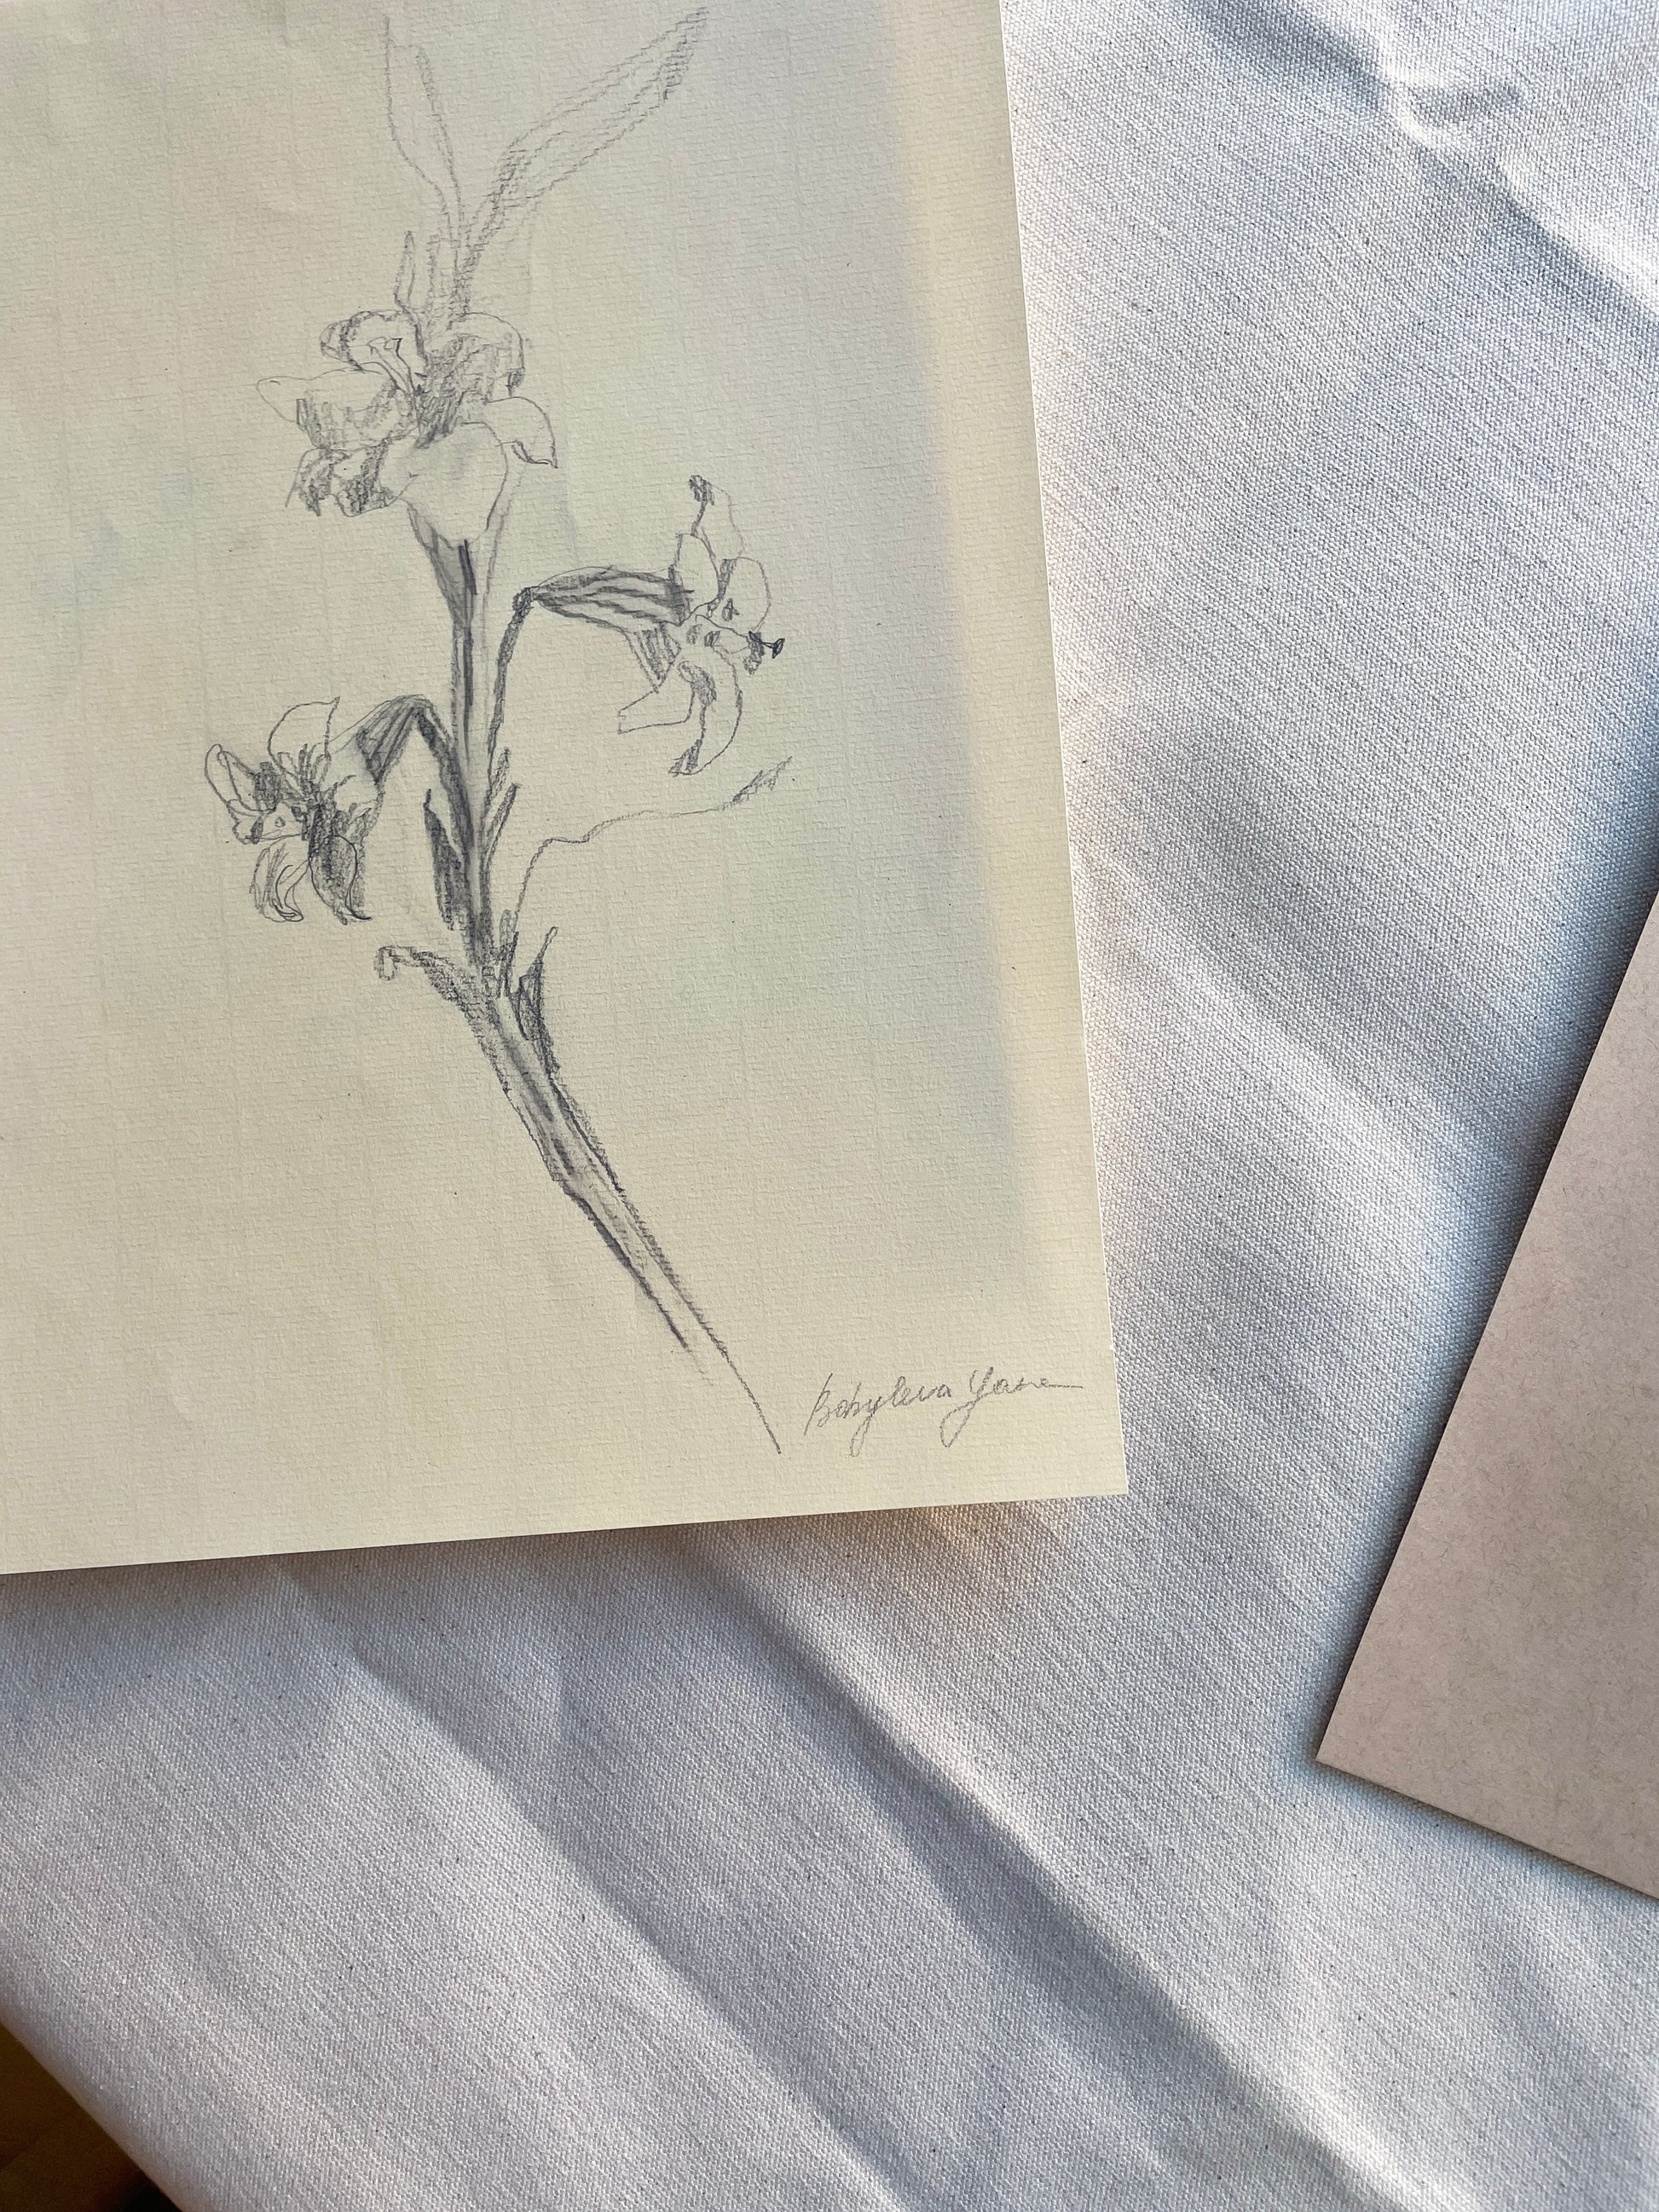 Hand-drawn graphite pencil floral sketch on beige paper